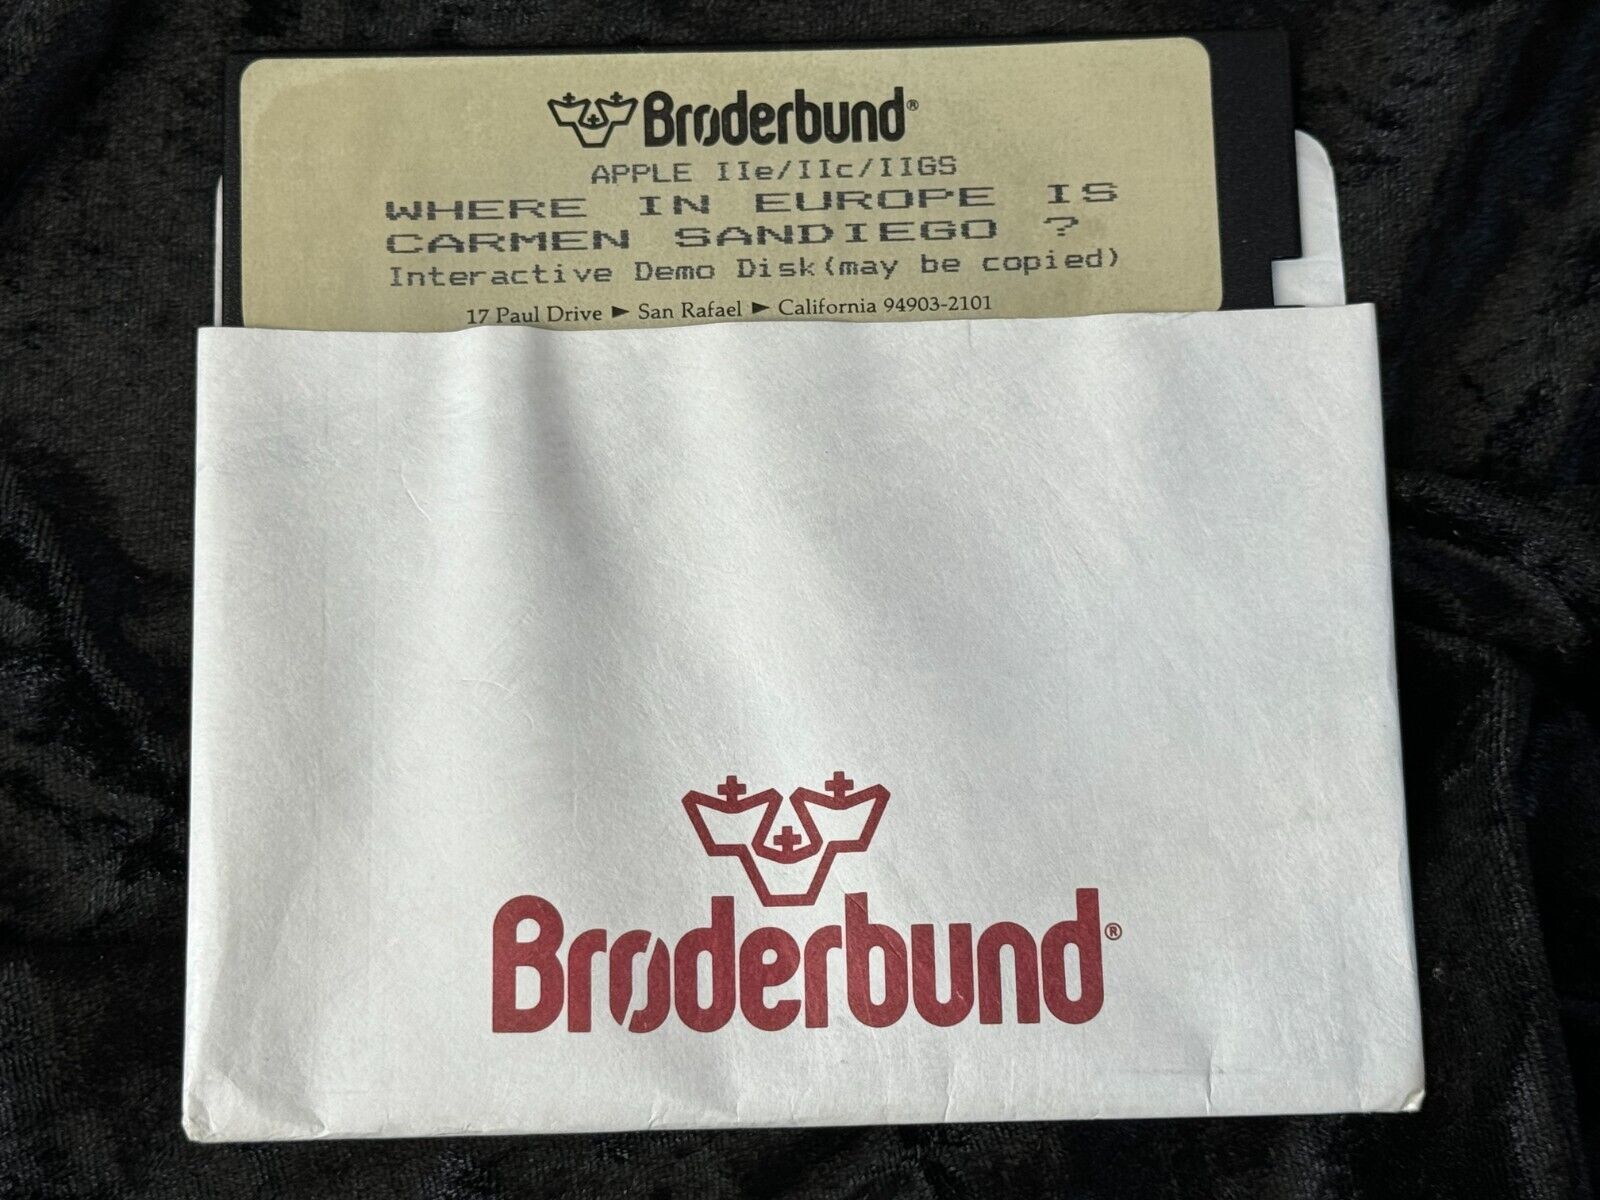 Broderbund Where in Europe is Carmen San Diego? for Apple II 5.25 Floppy Media